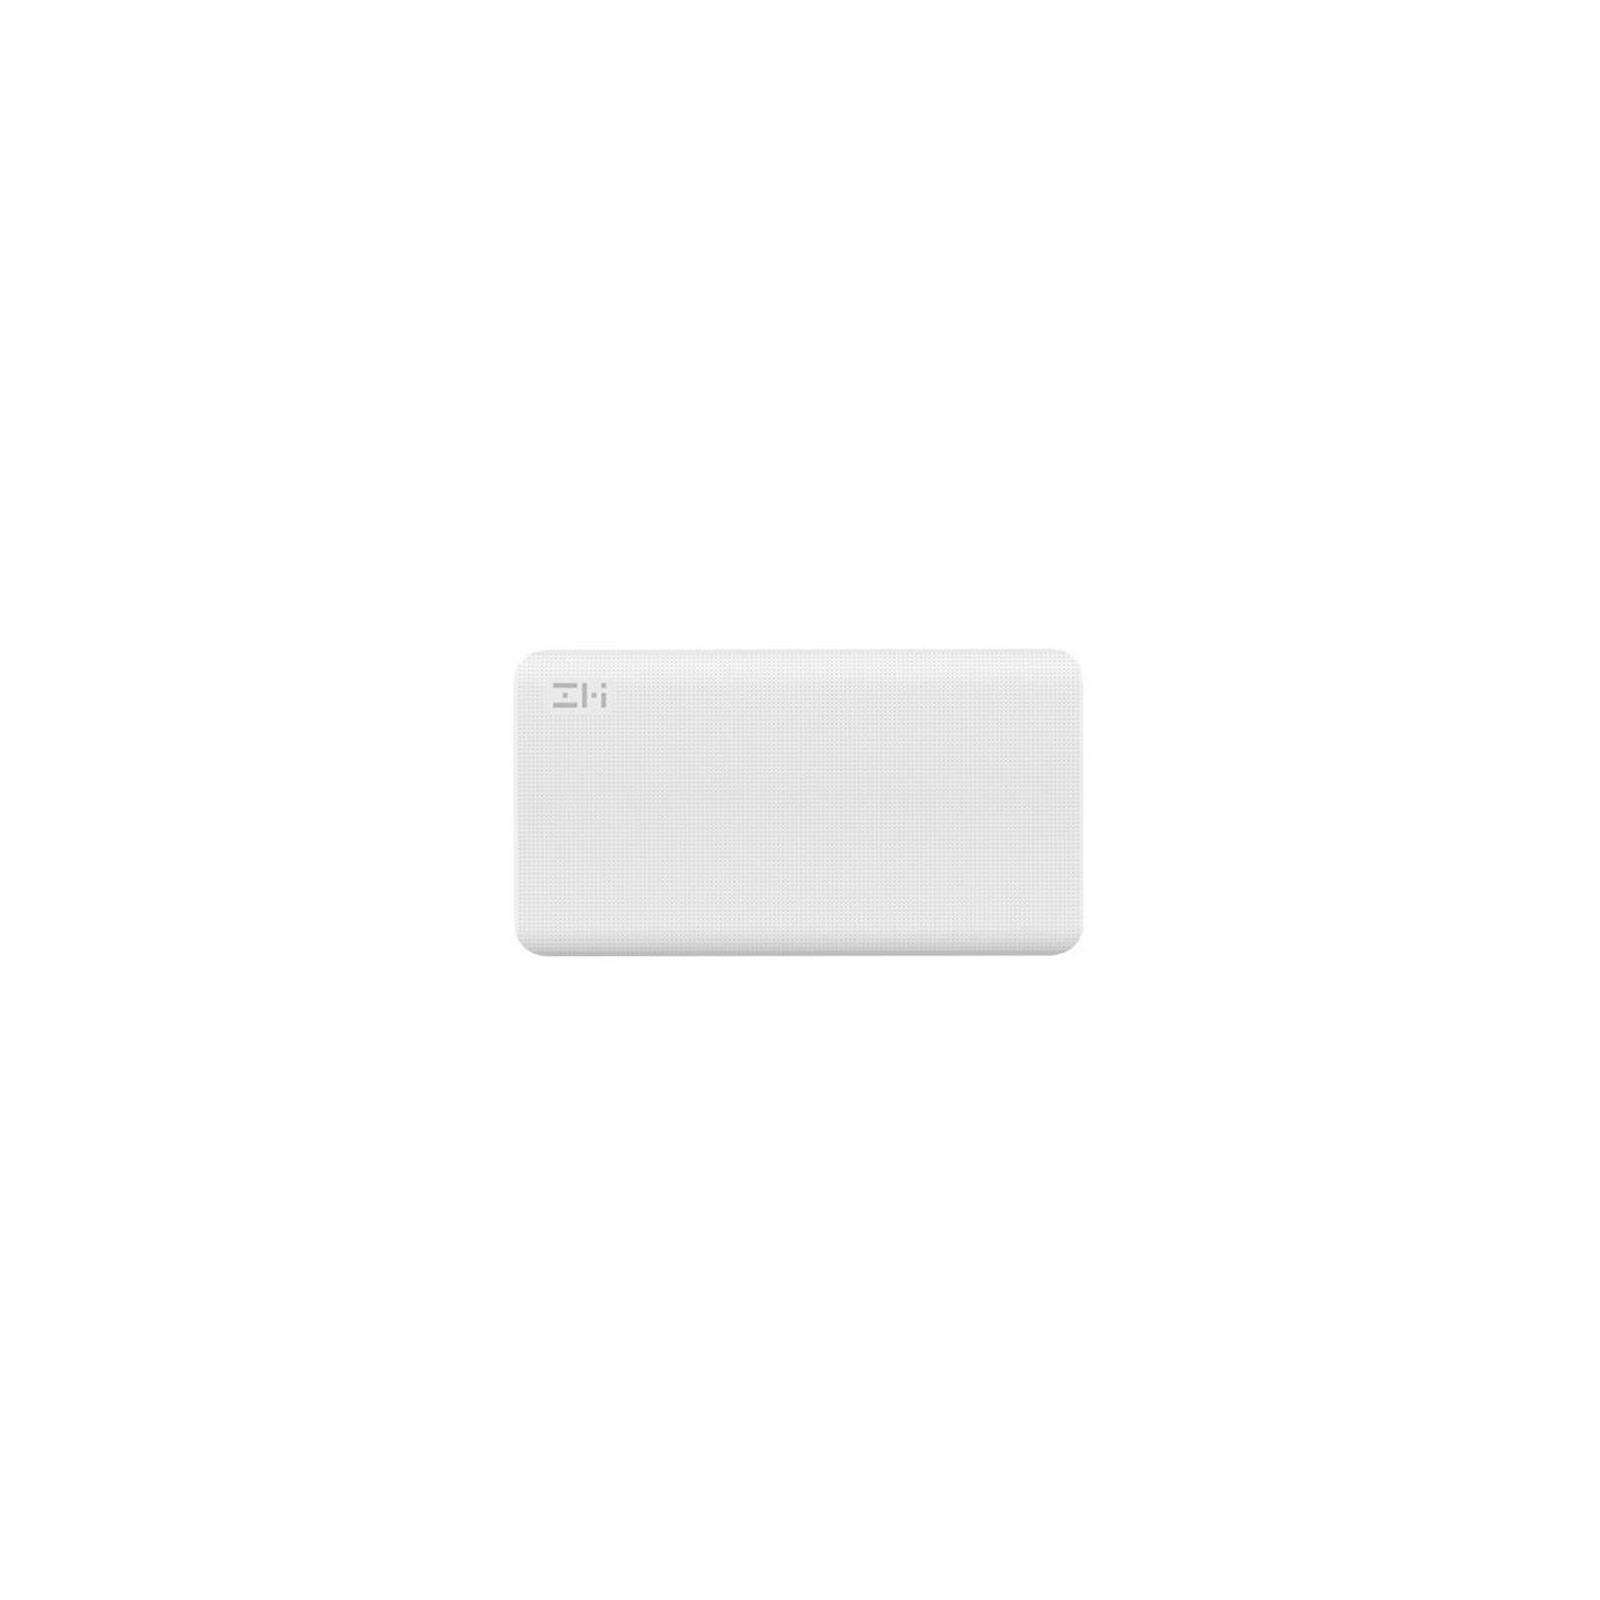 Батарея універсальна ZMI QB810 10000mAh Type-C White (Quick Charge 2.0) (QB810-WH) зображення 2